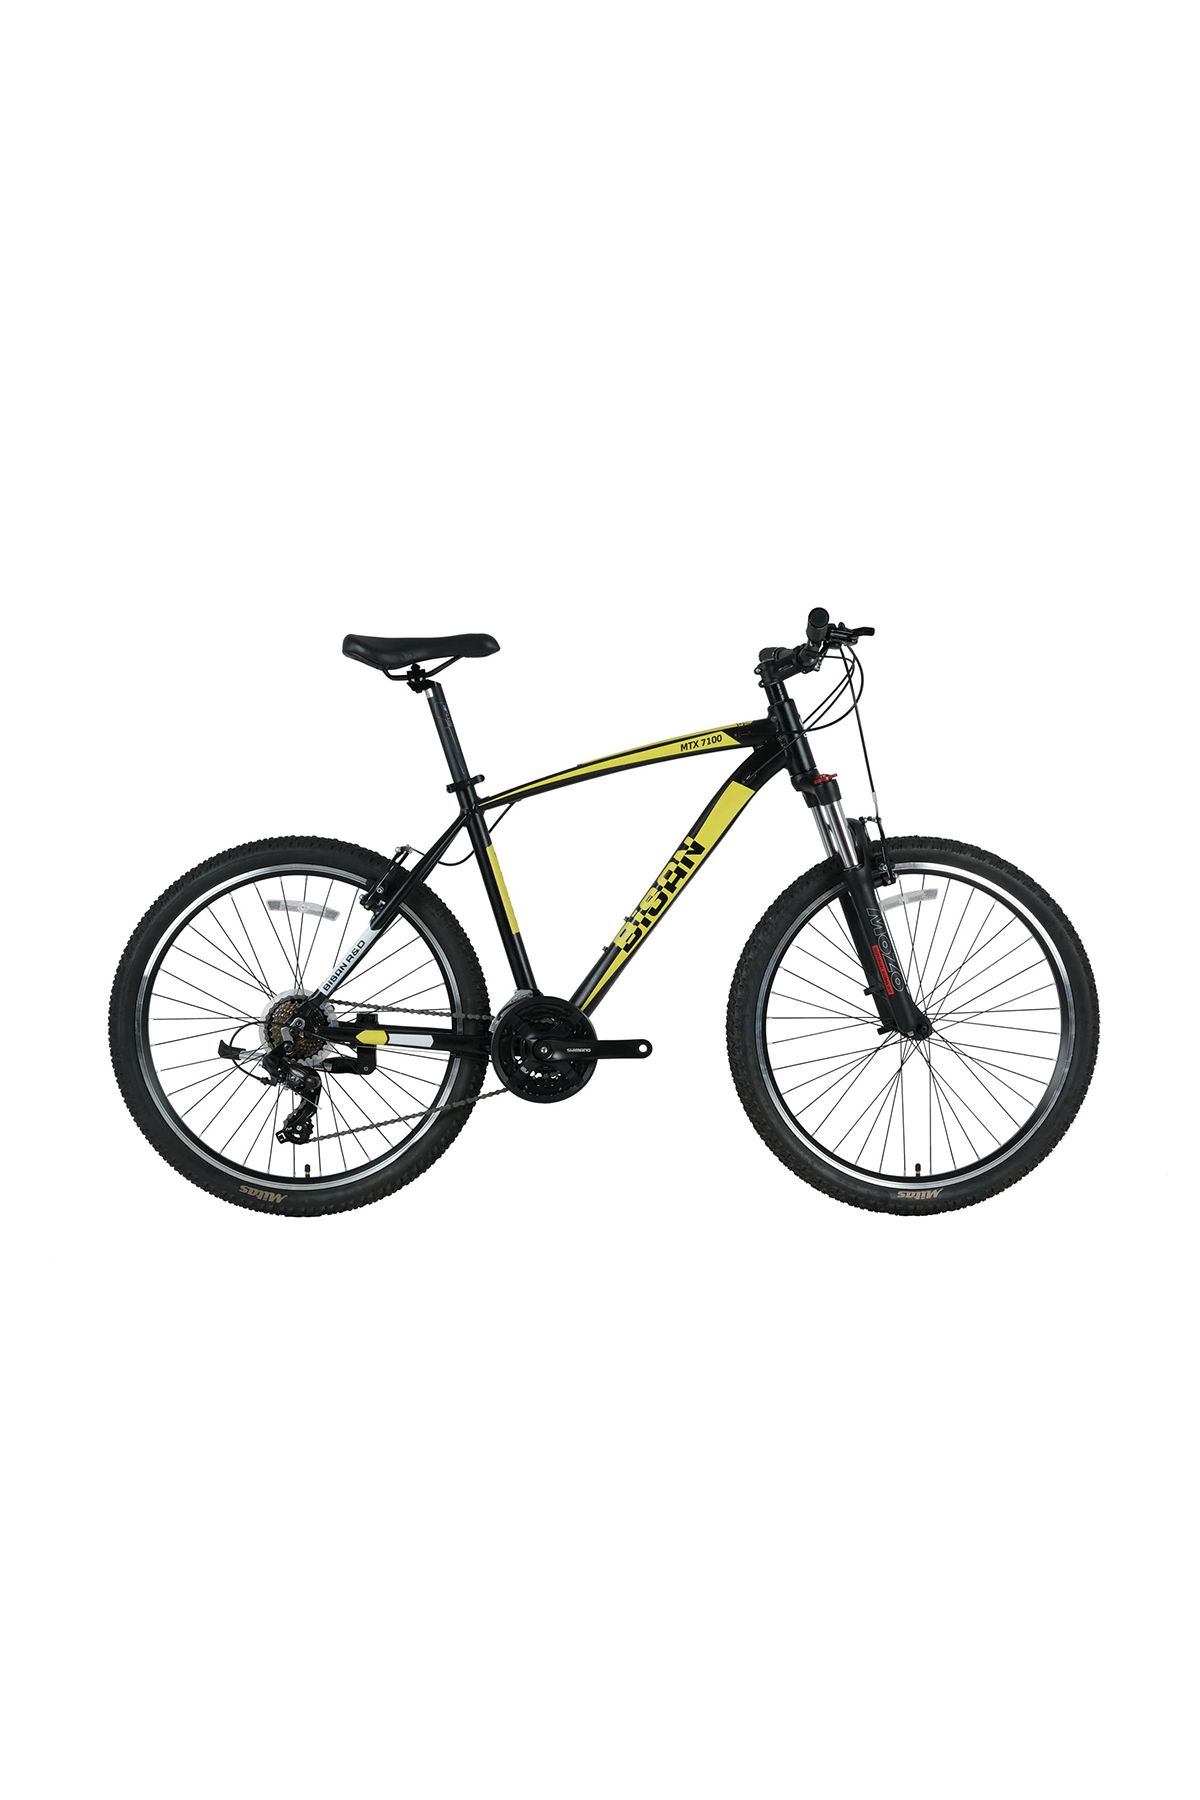 Bisan Mtx 7100 - 27.5'' Jant Dağ Bisikleti 19'' 48 Cm (L) Kadro - Siyah Sarı